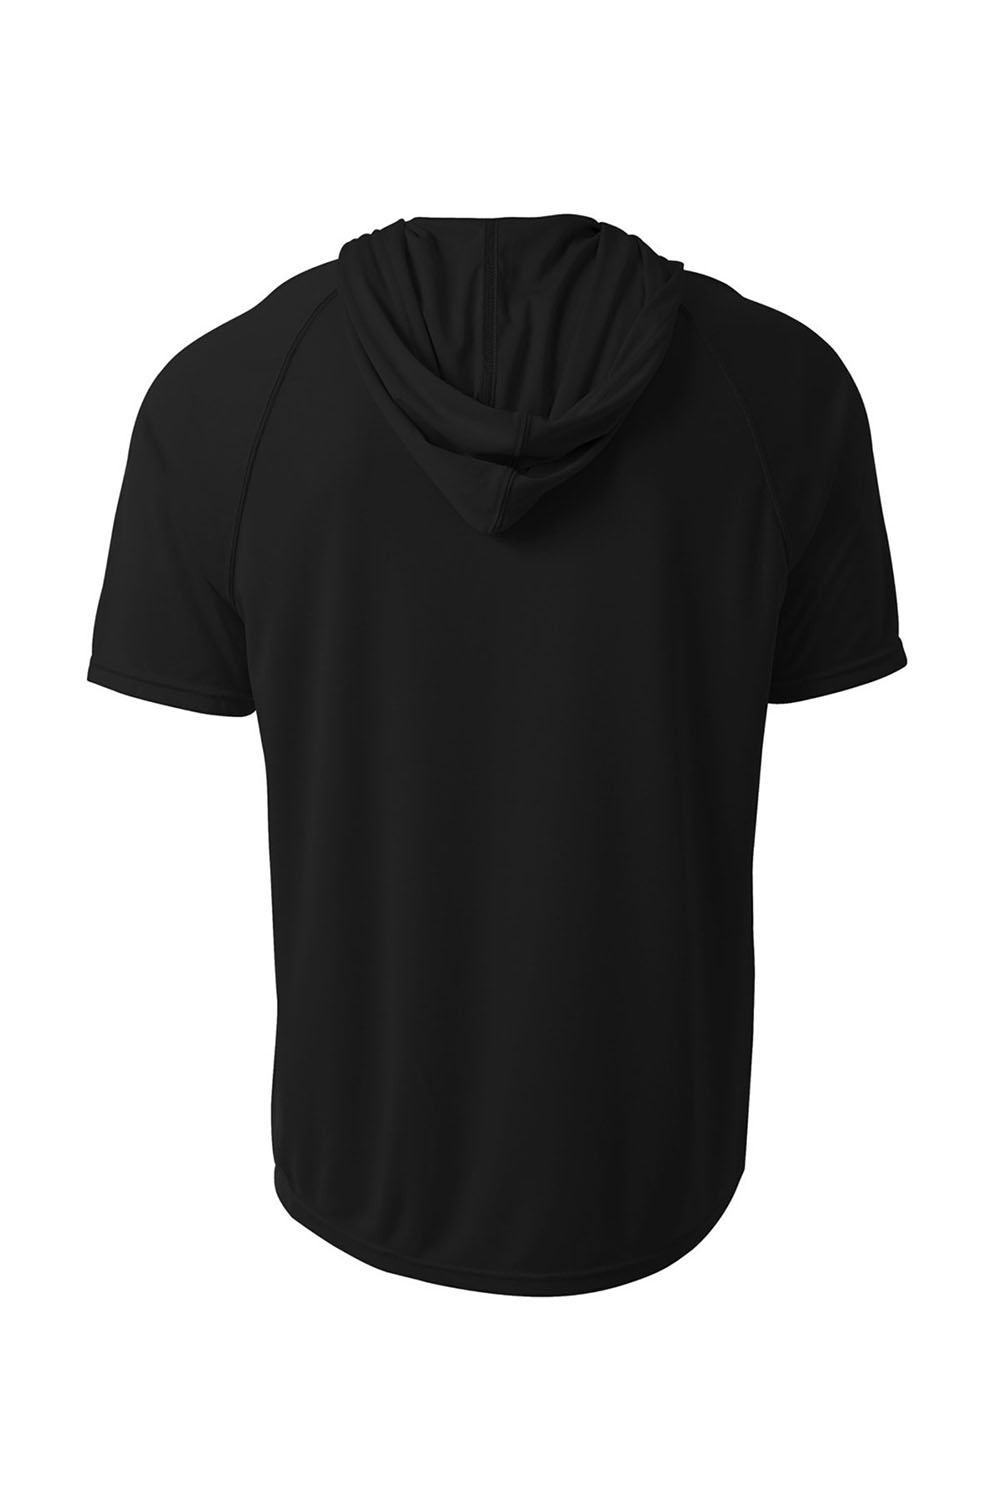 A4 N3408 Mens Performance Moisture Wicking Short Sleeve Hooded T-Shirt Hoodie Black Flat Back